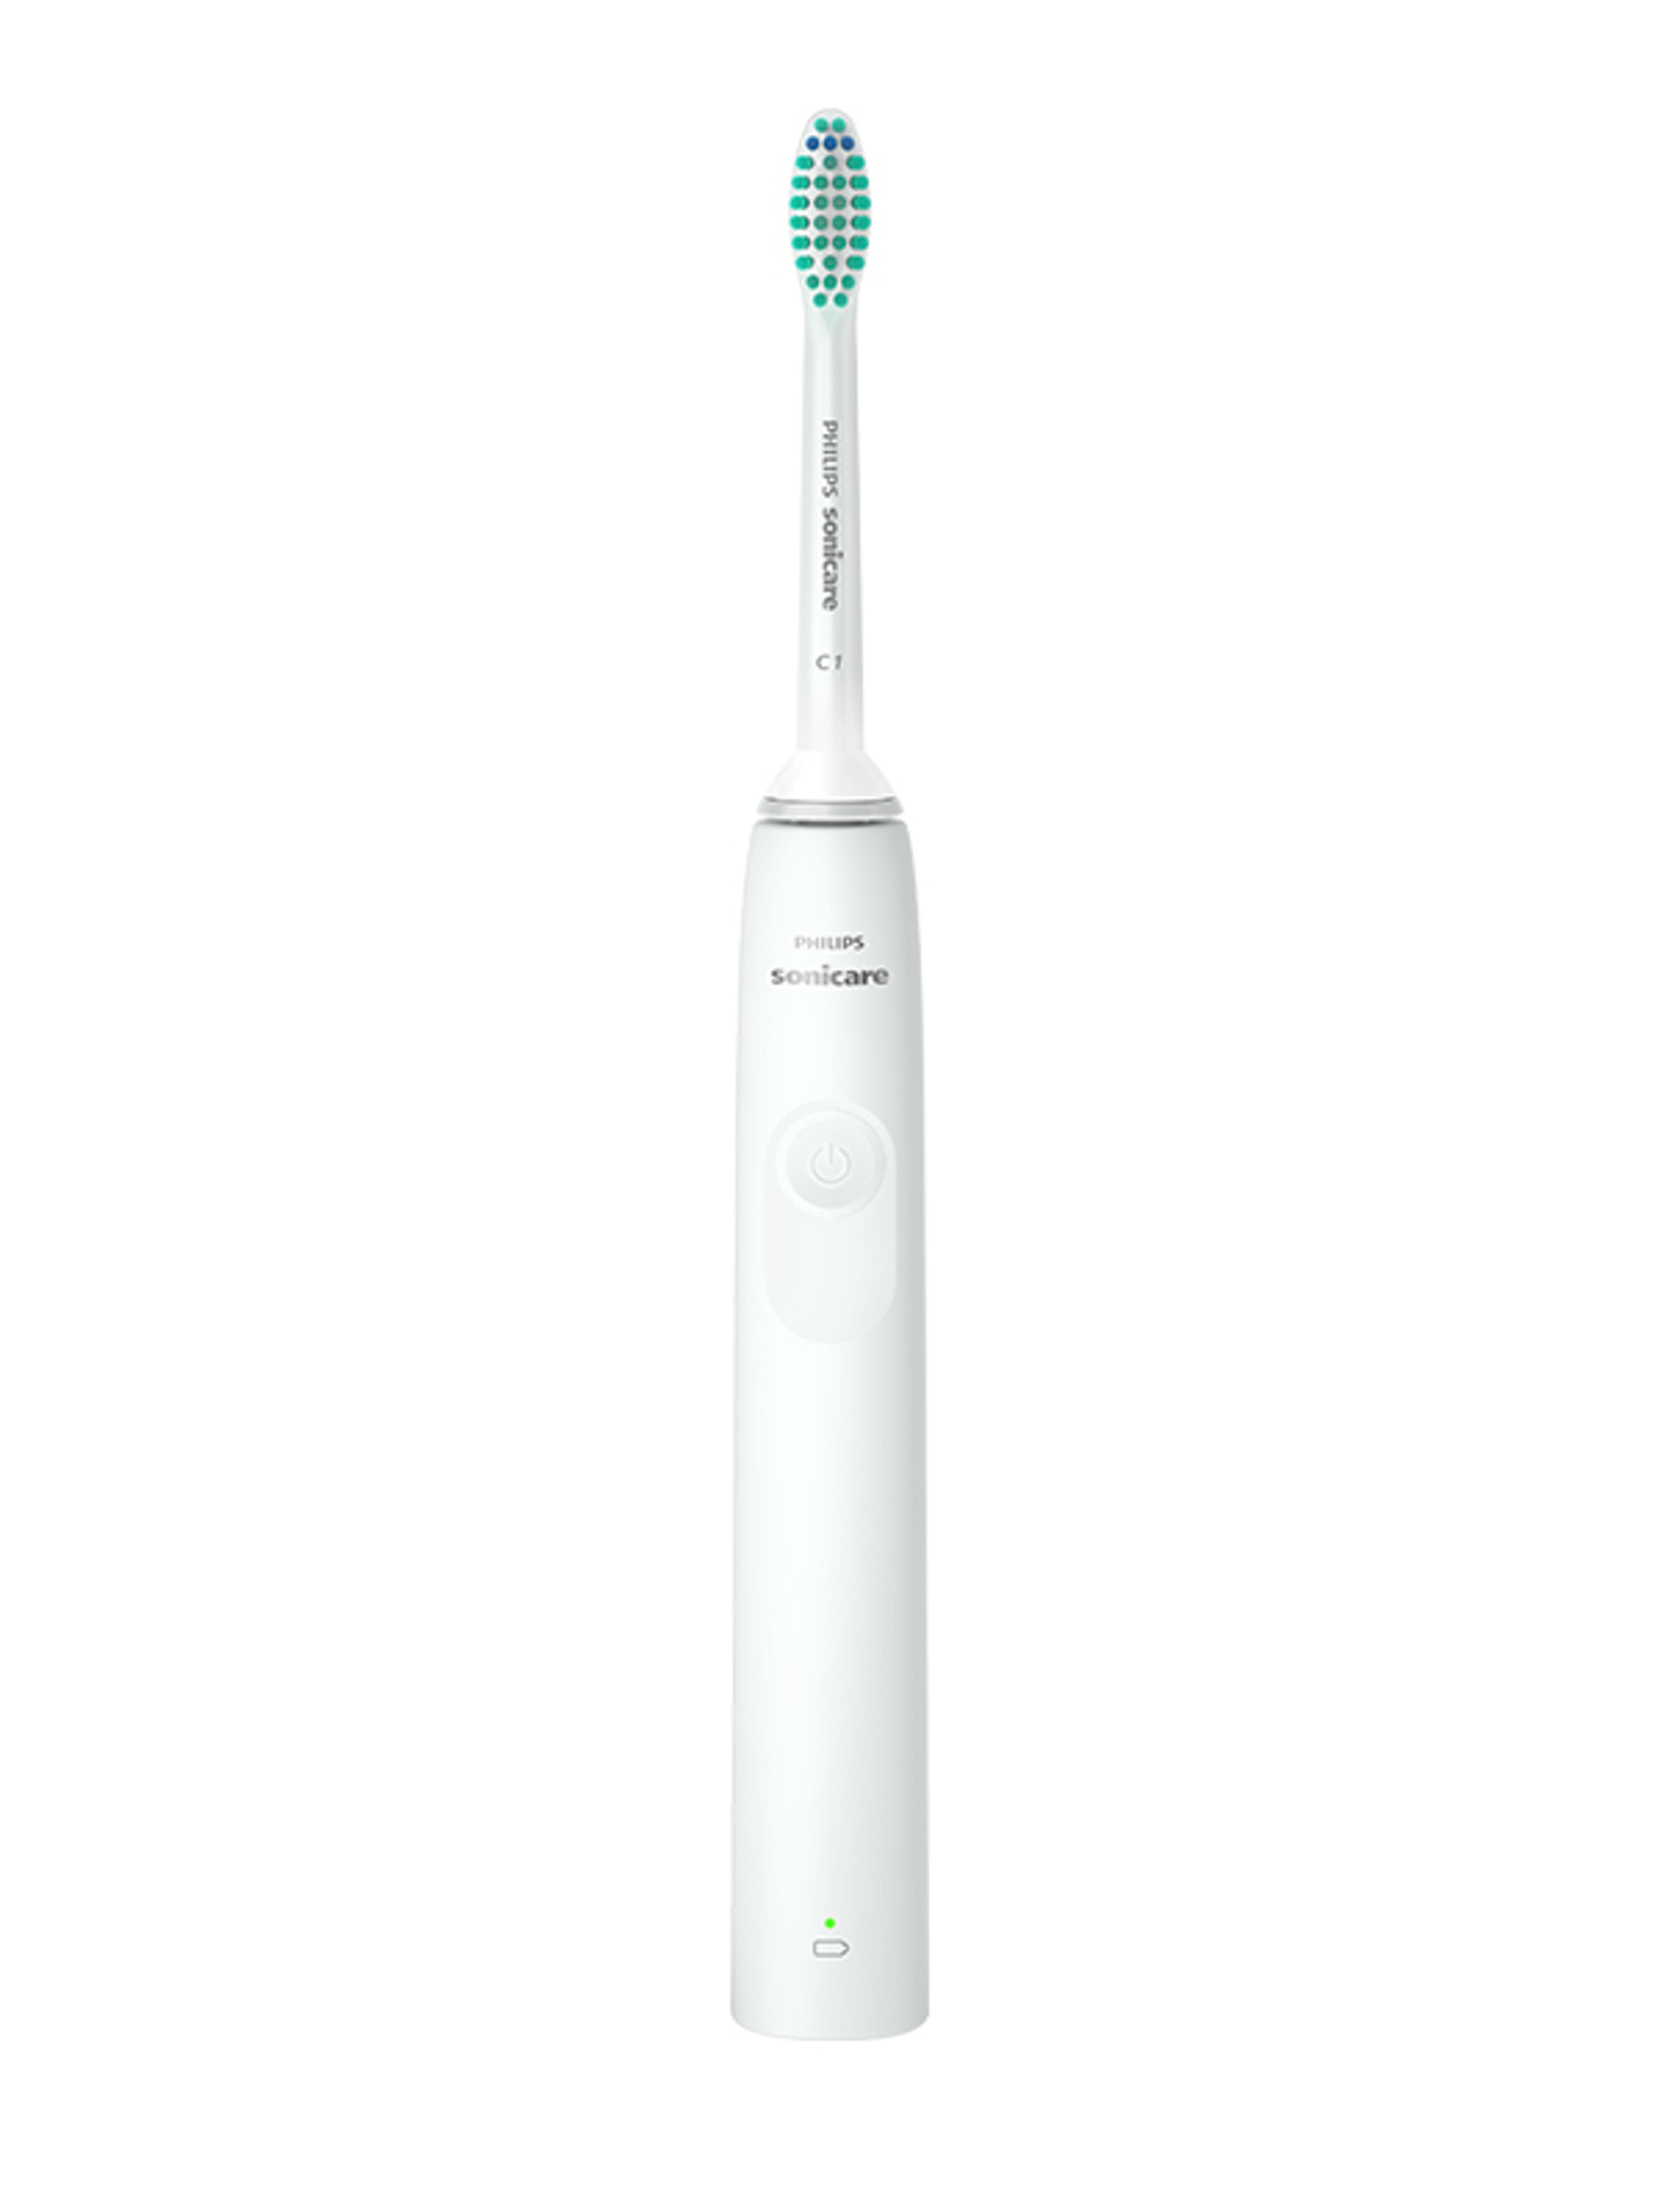 Philips Sonicare S2100 elektromos fogkefe, fehér/kék - 1 db-4